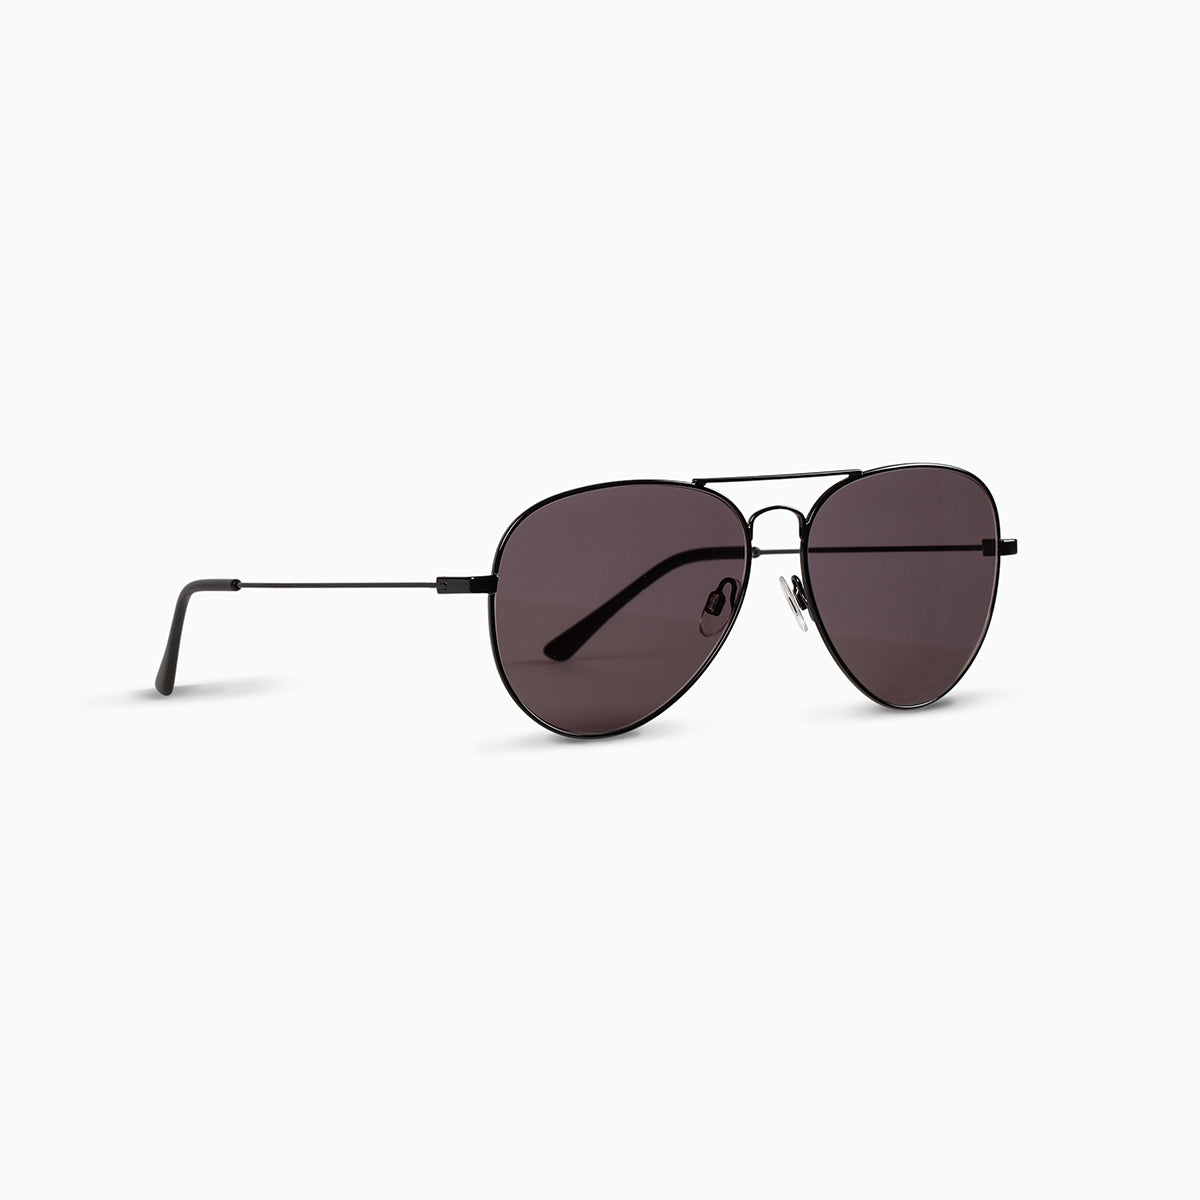 Aviator Sunglasses | Black | Product Detail Image | Uncommon James Home